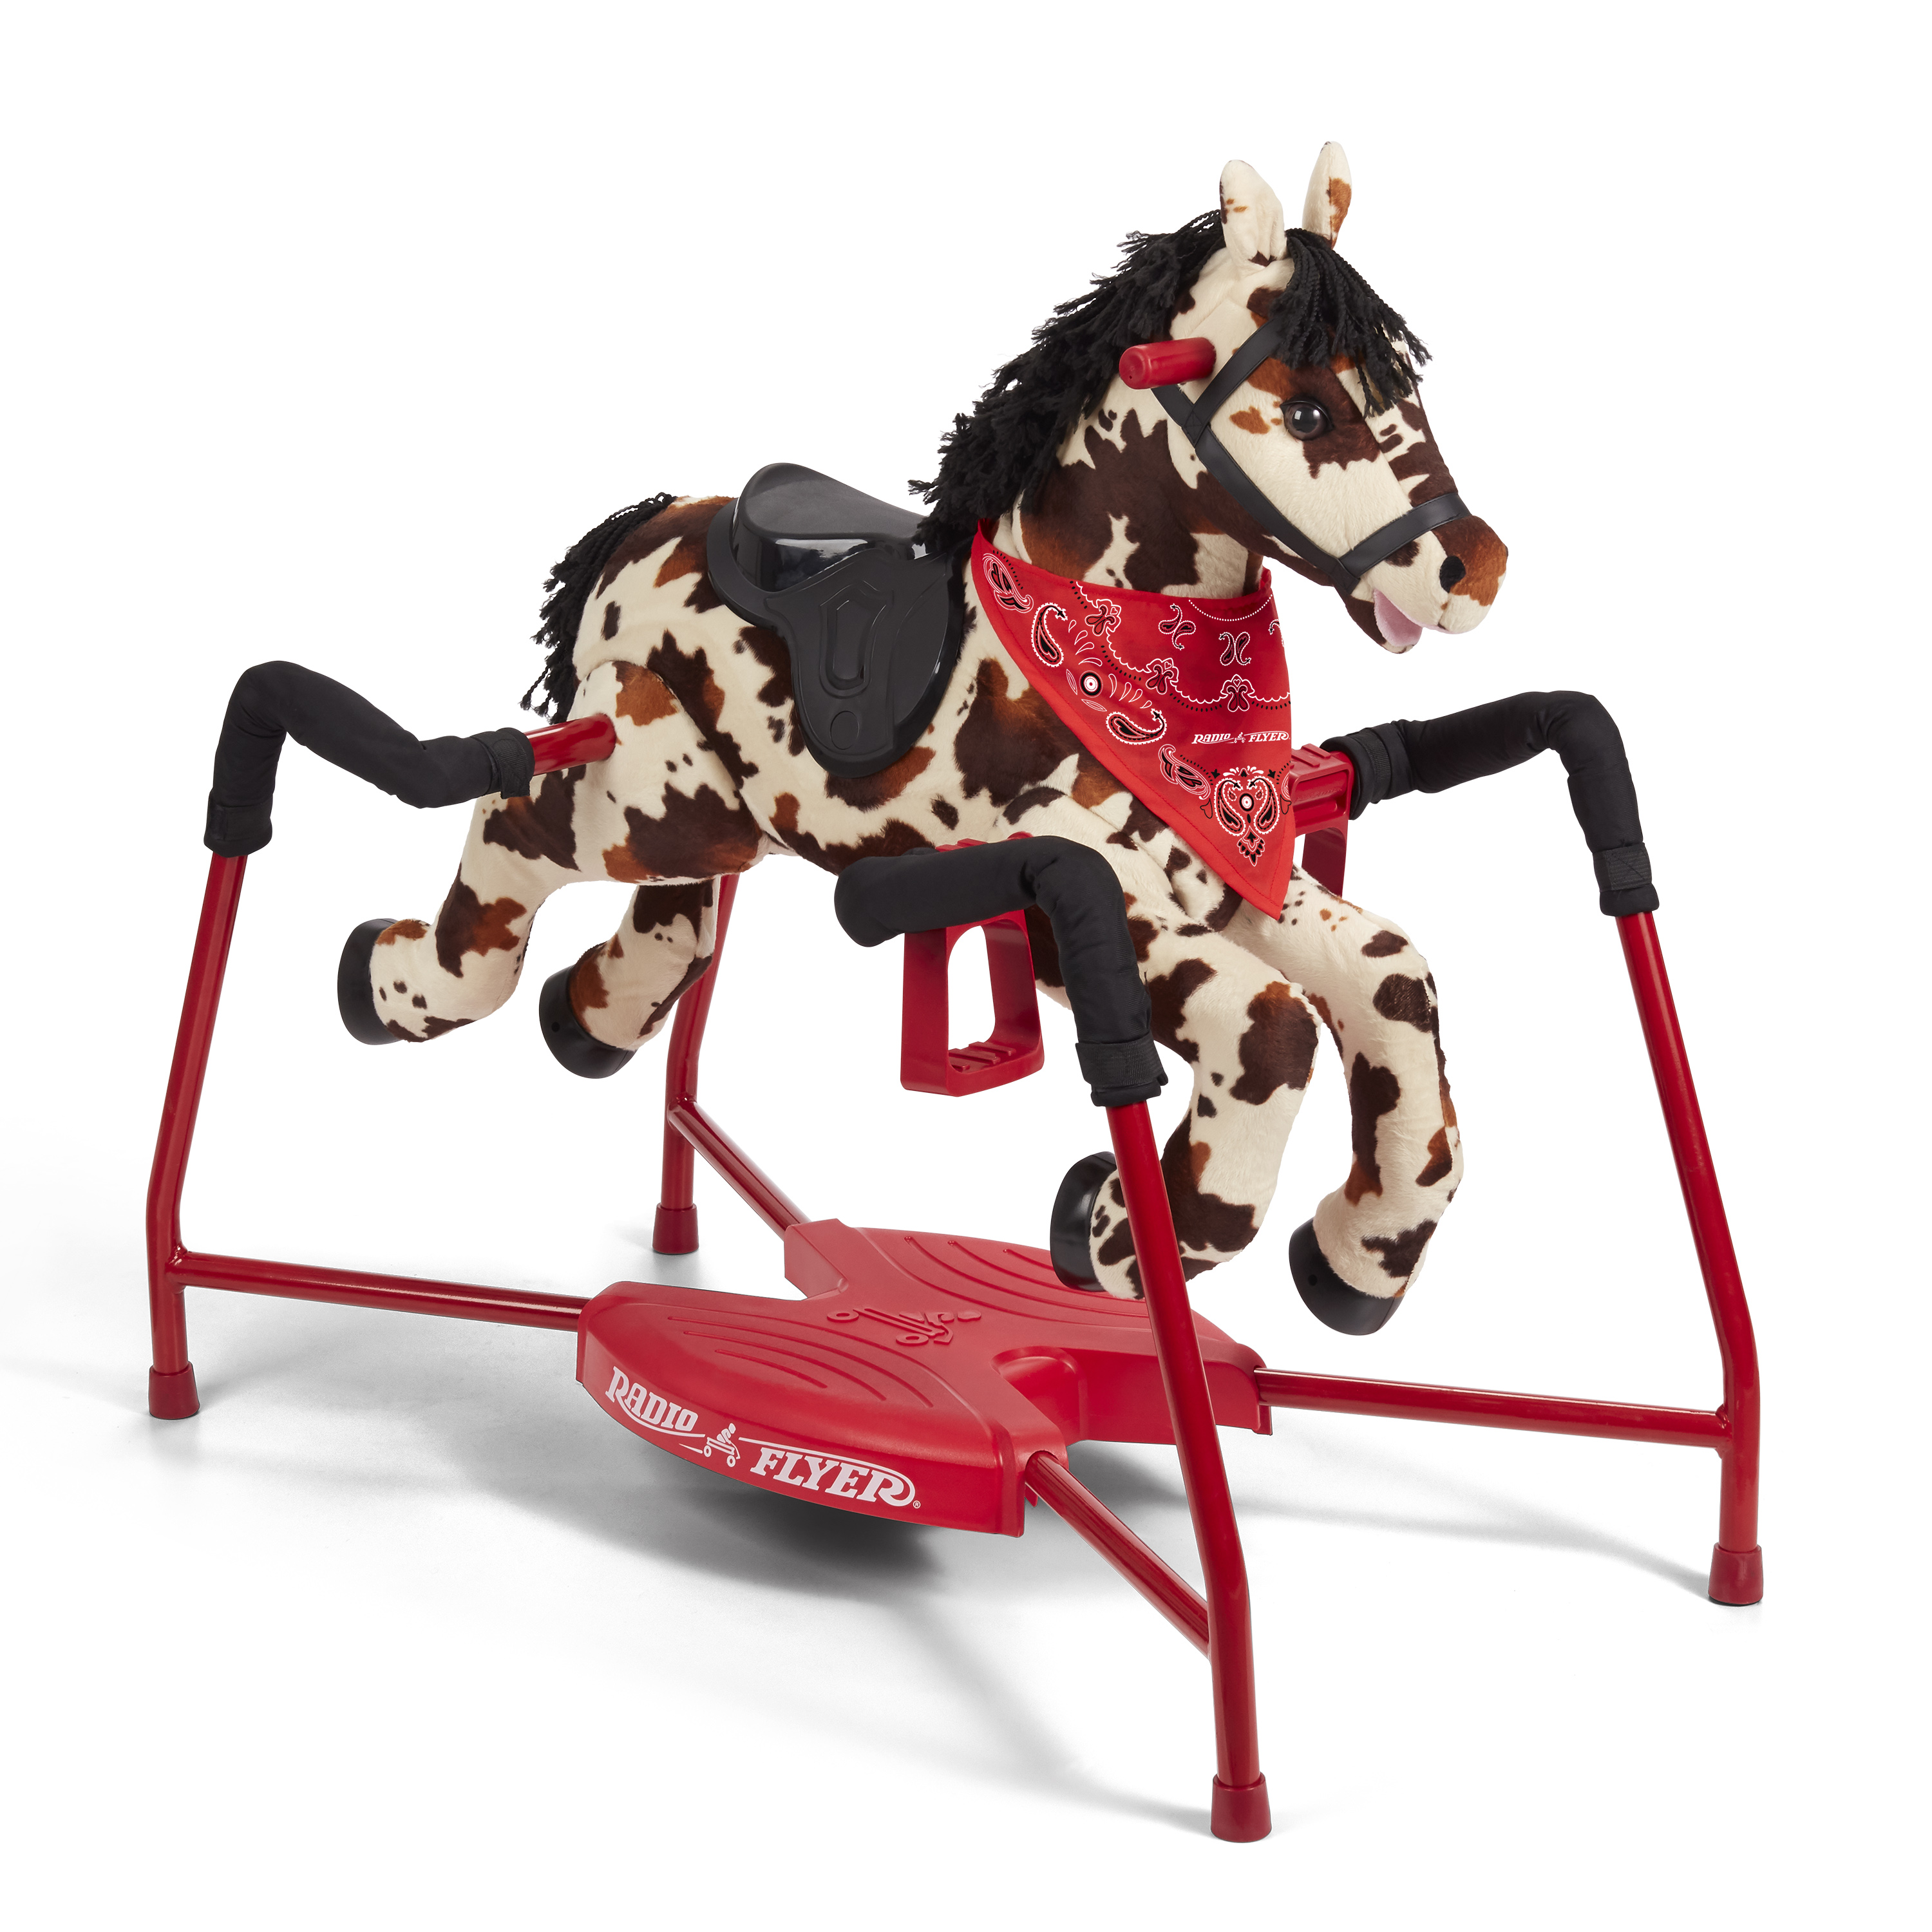 Model 386 Freckles Plush Interactive Riding Horse Parts